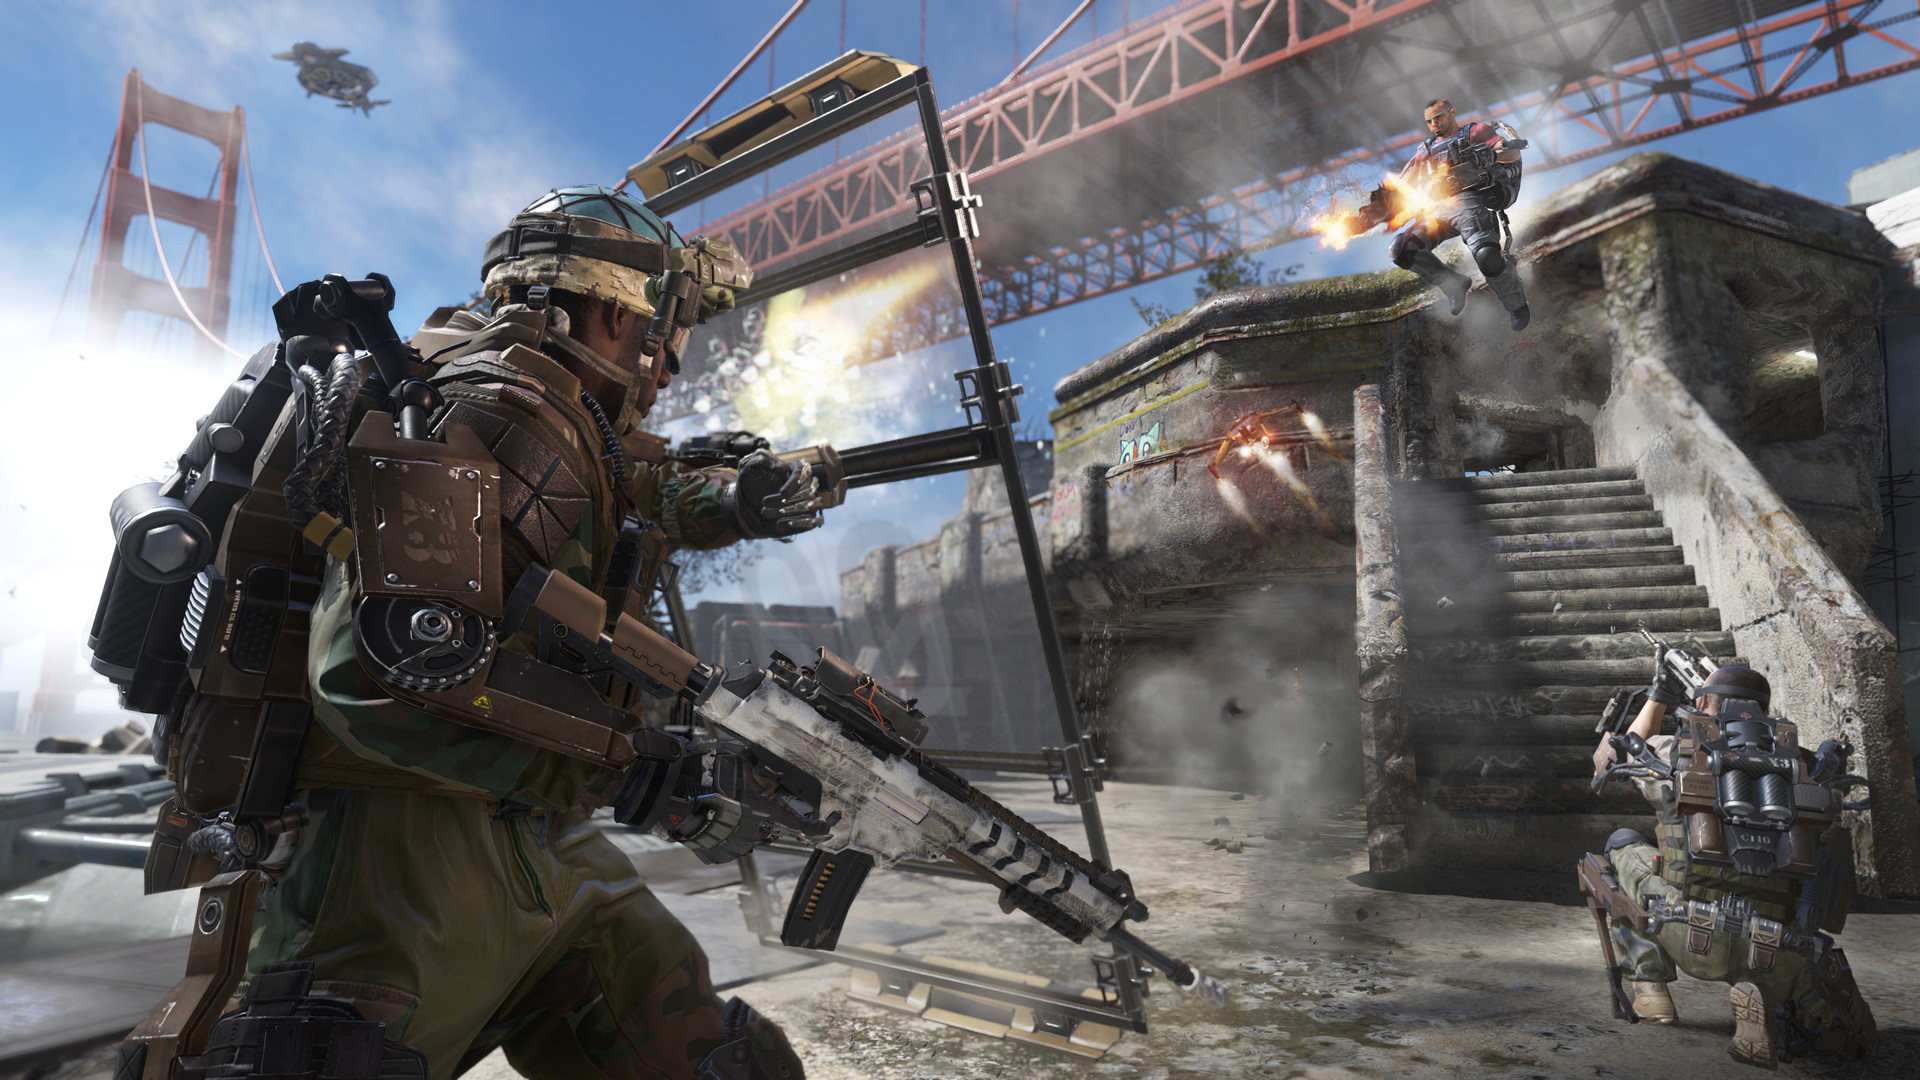 Call of Duty®: Advanced Warfare - Gold Edition on Steam